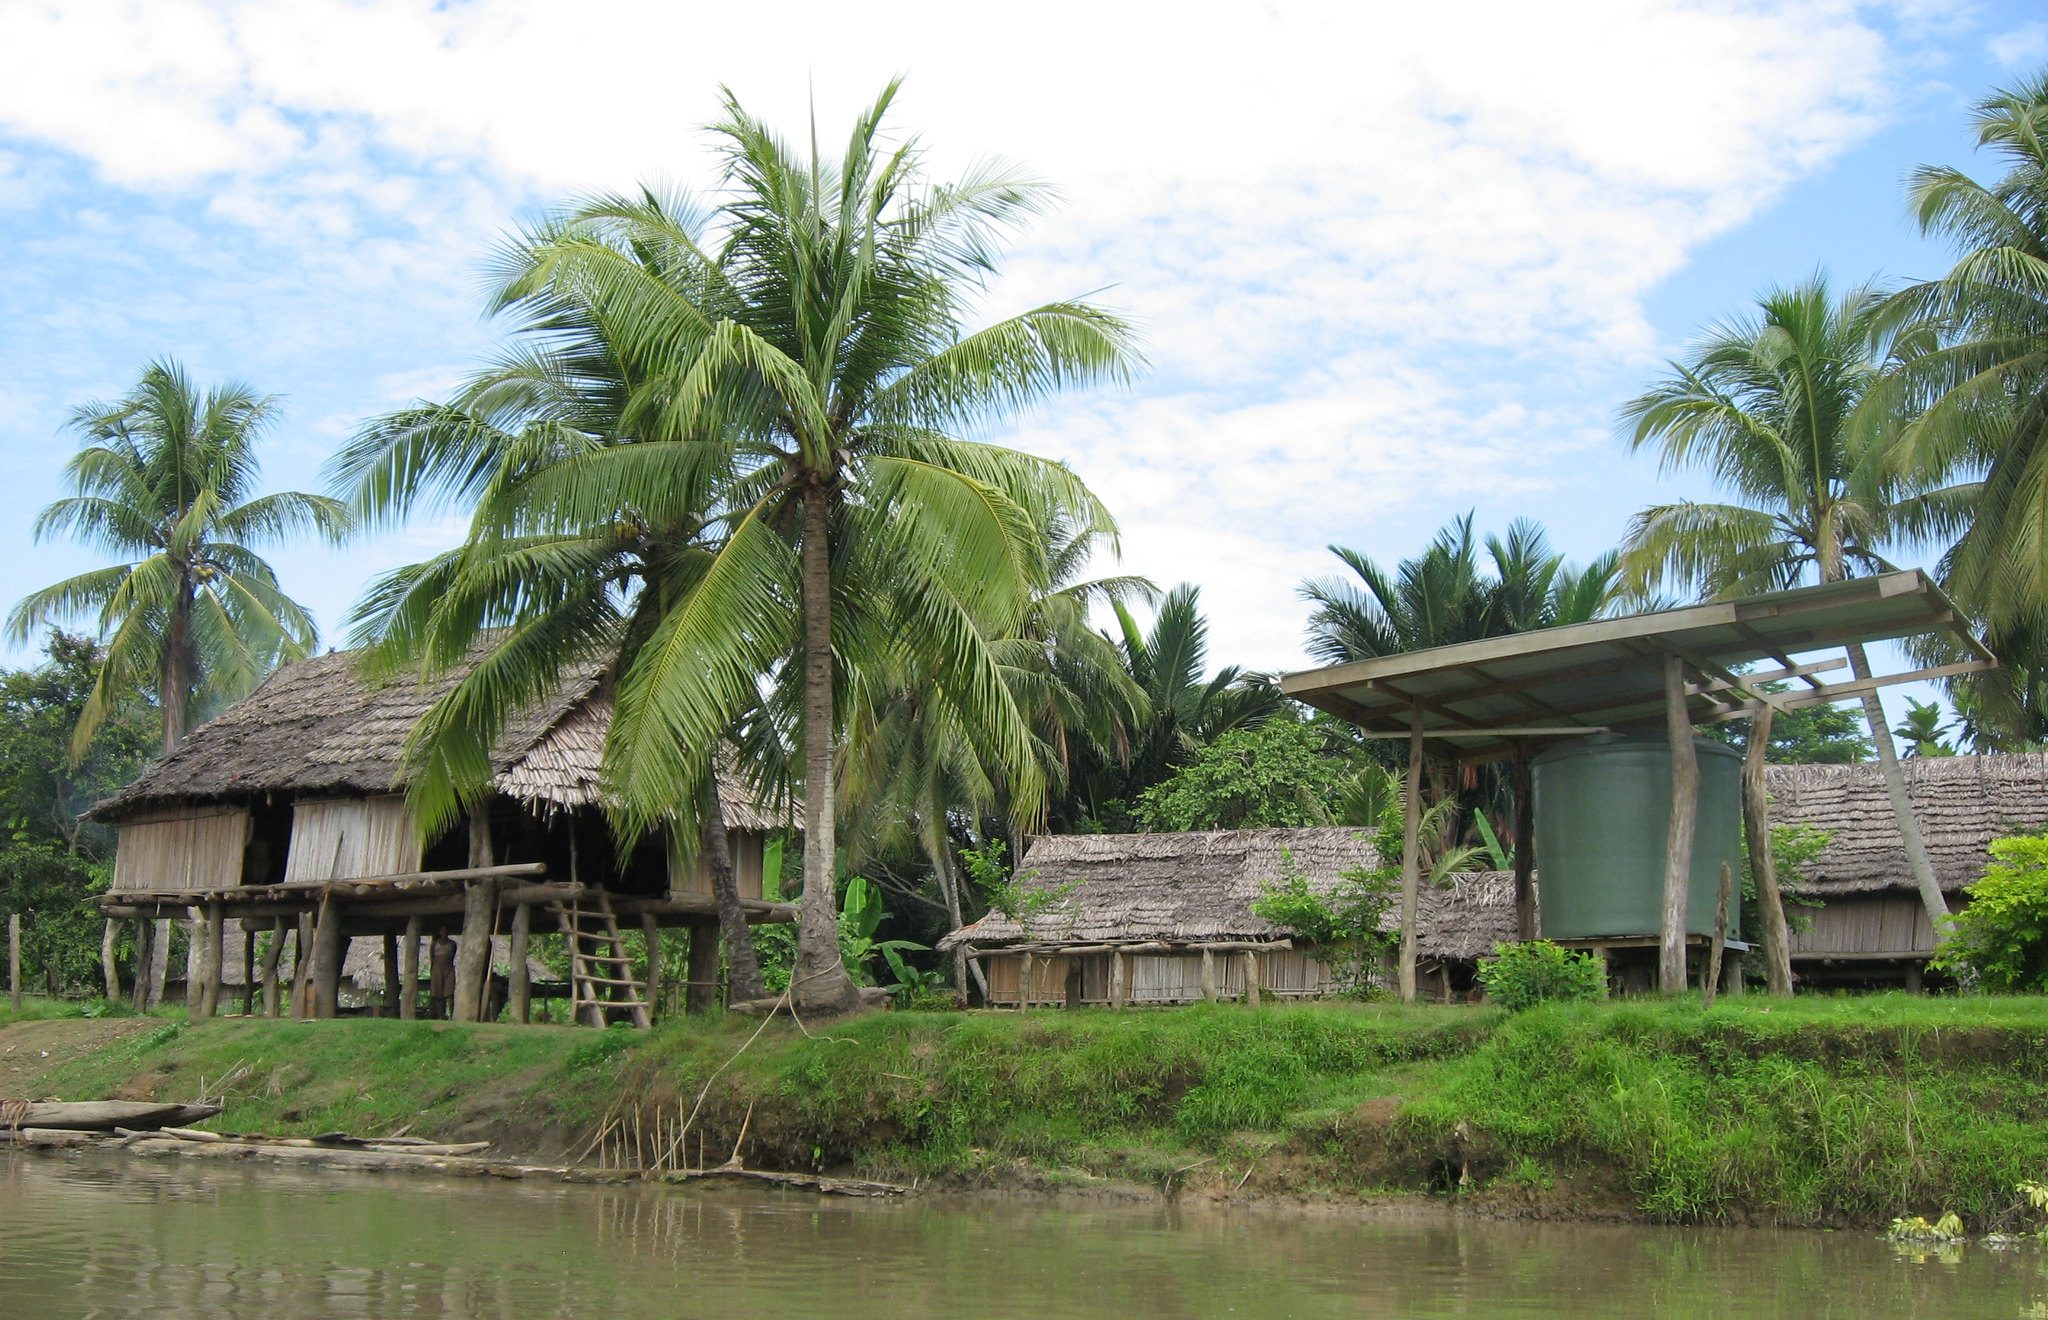 Sepik River, PNG (David Bacon-Flickr)